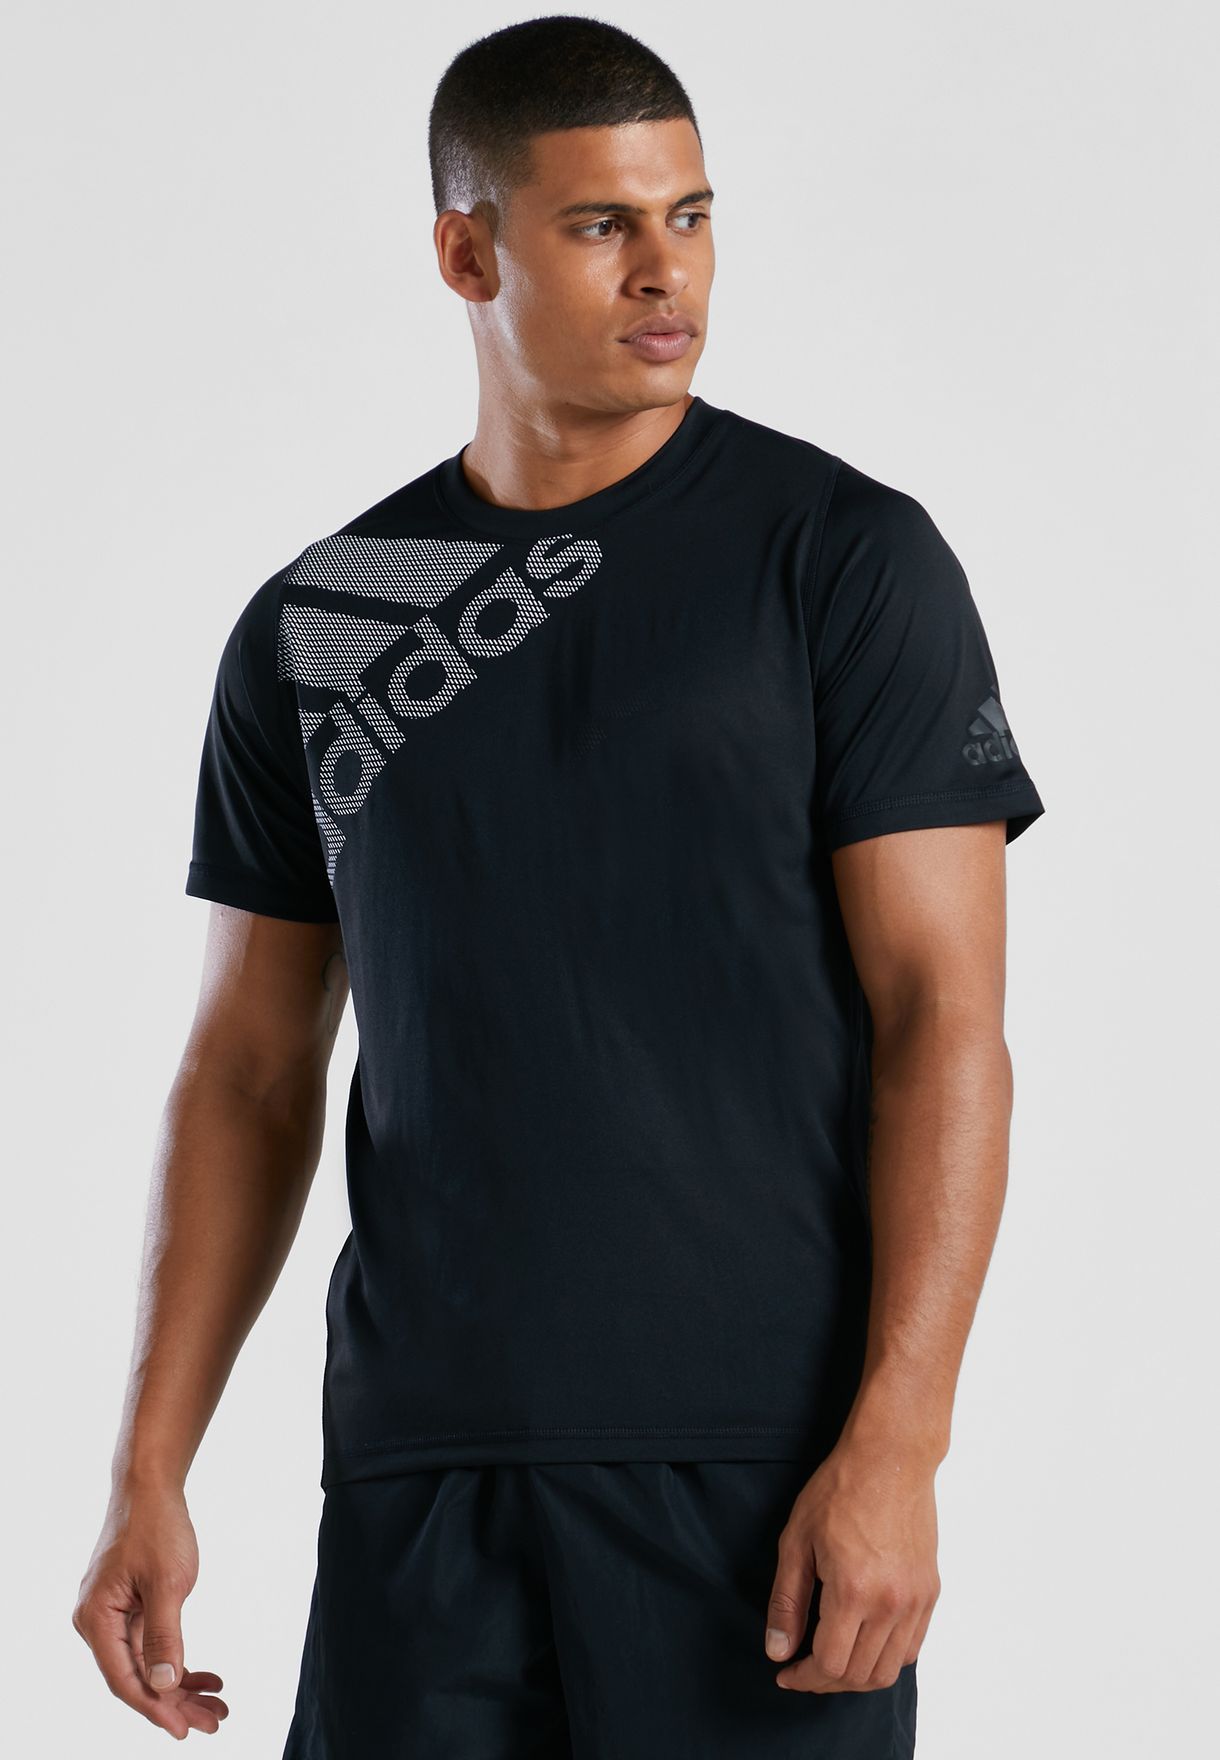 adidas new design t shirt